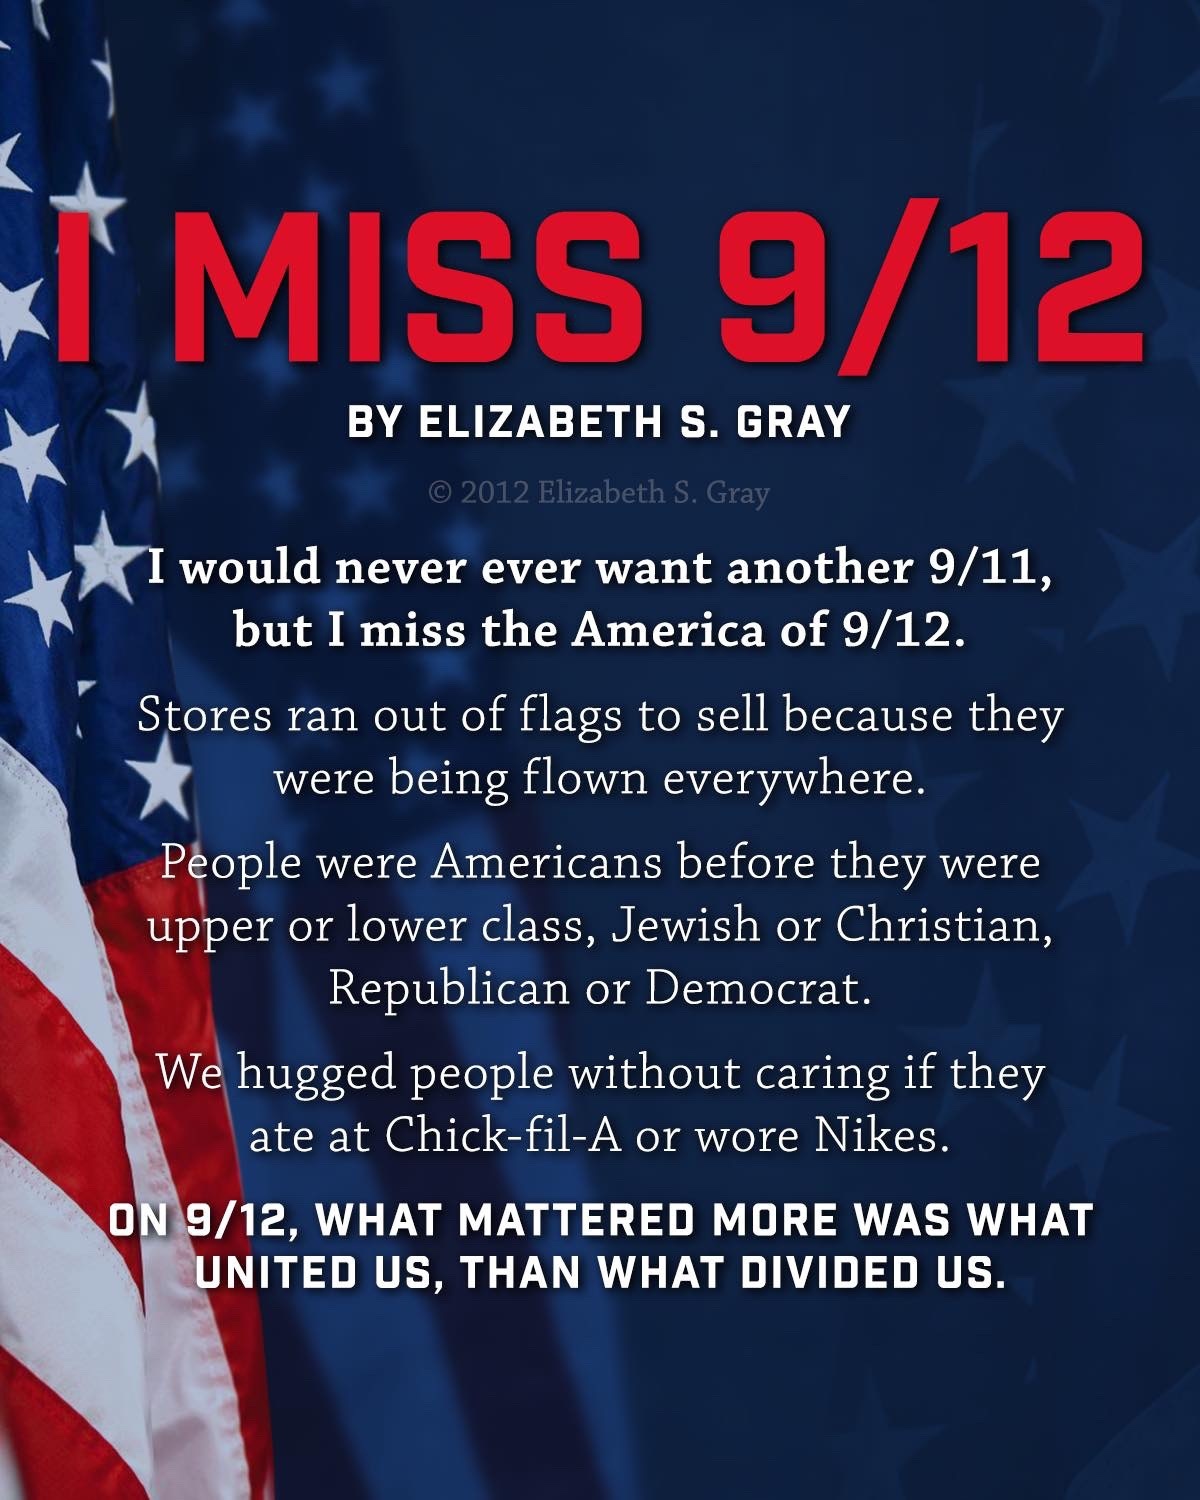 I miss 9/12 by Elizabeth S.Gray